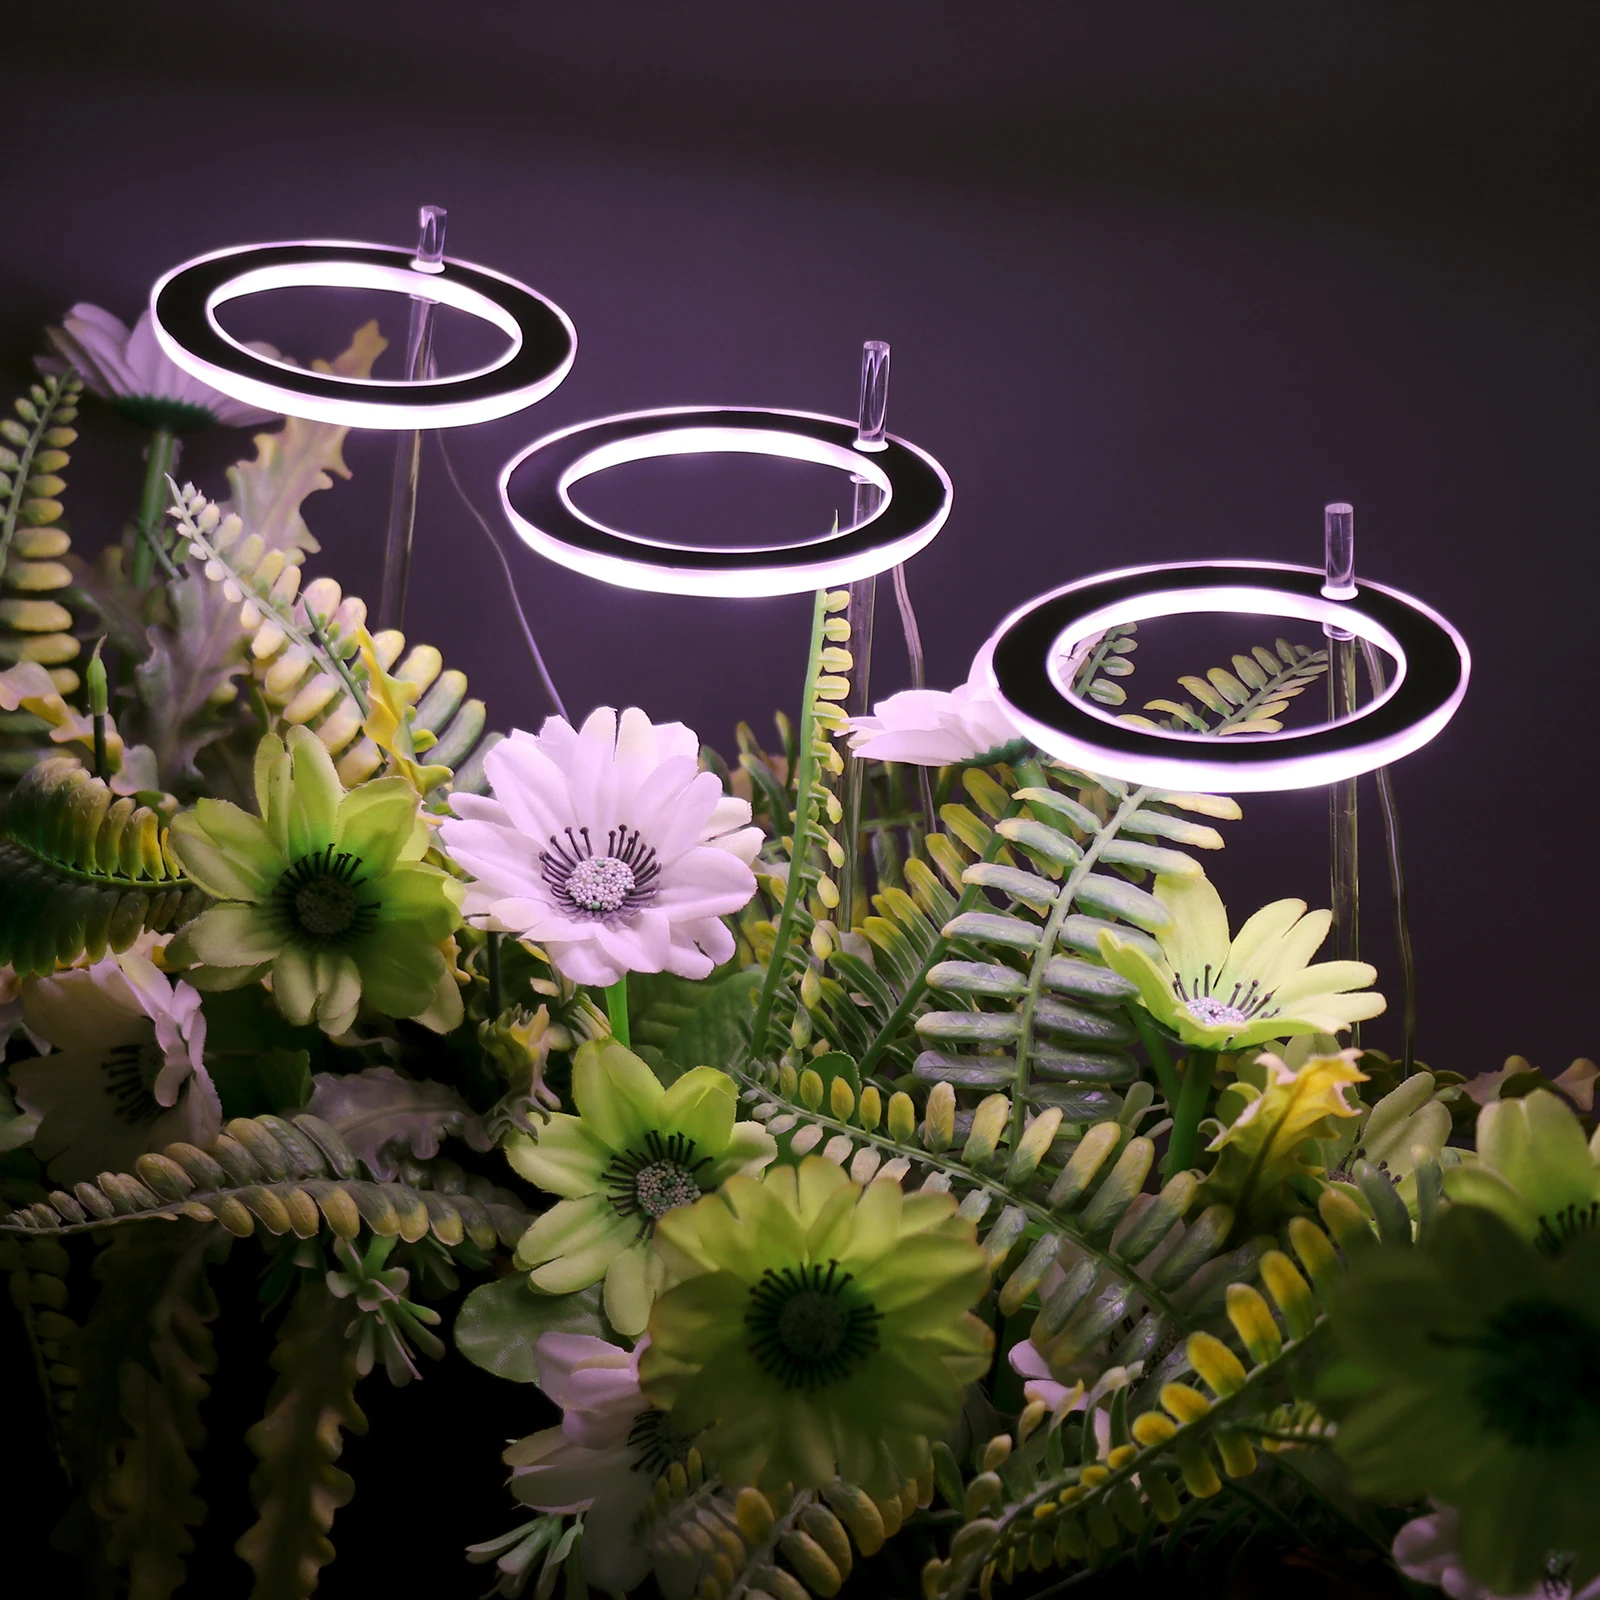 Full Spectrum Lamp Led Grow Light Phyto Lamp For Plants Bulb Growth Light Hydroponics Lighting USB Greenhouse Indoor Flower